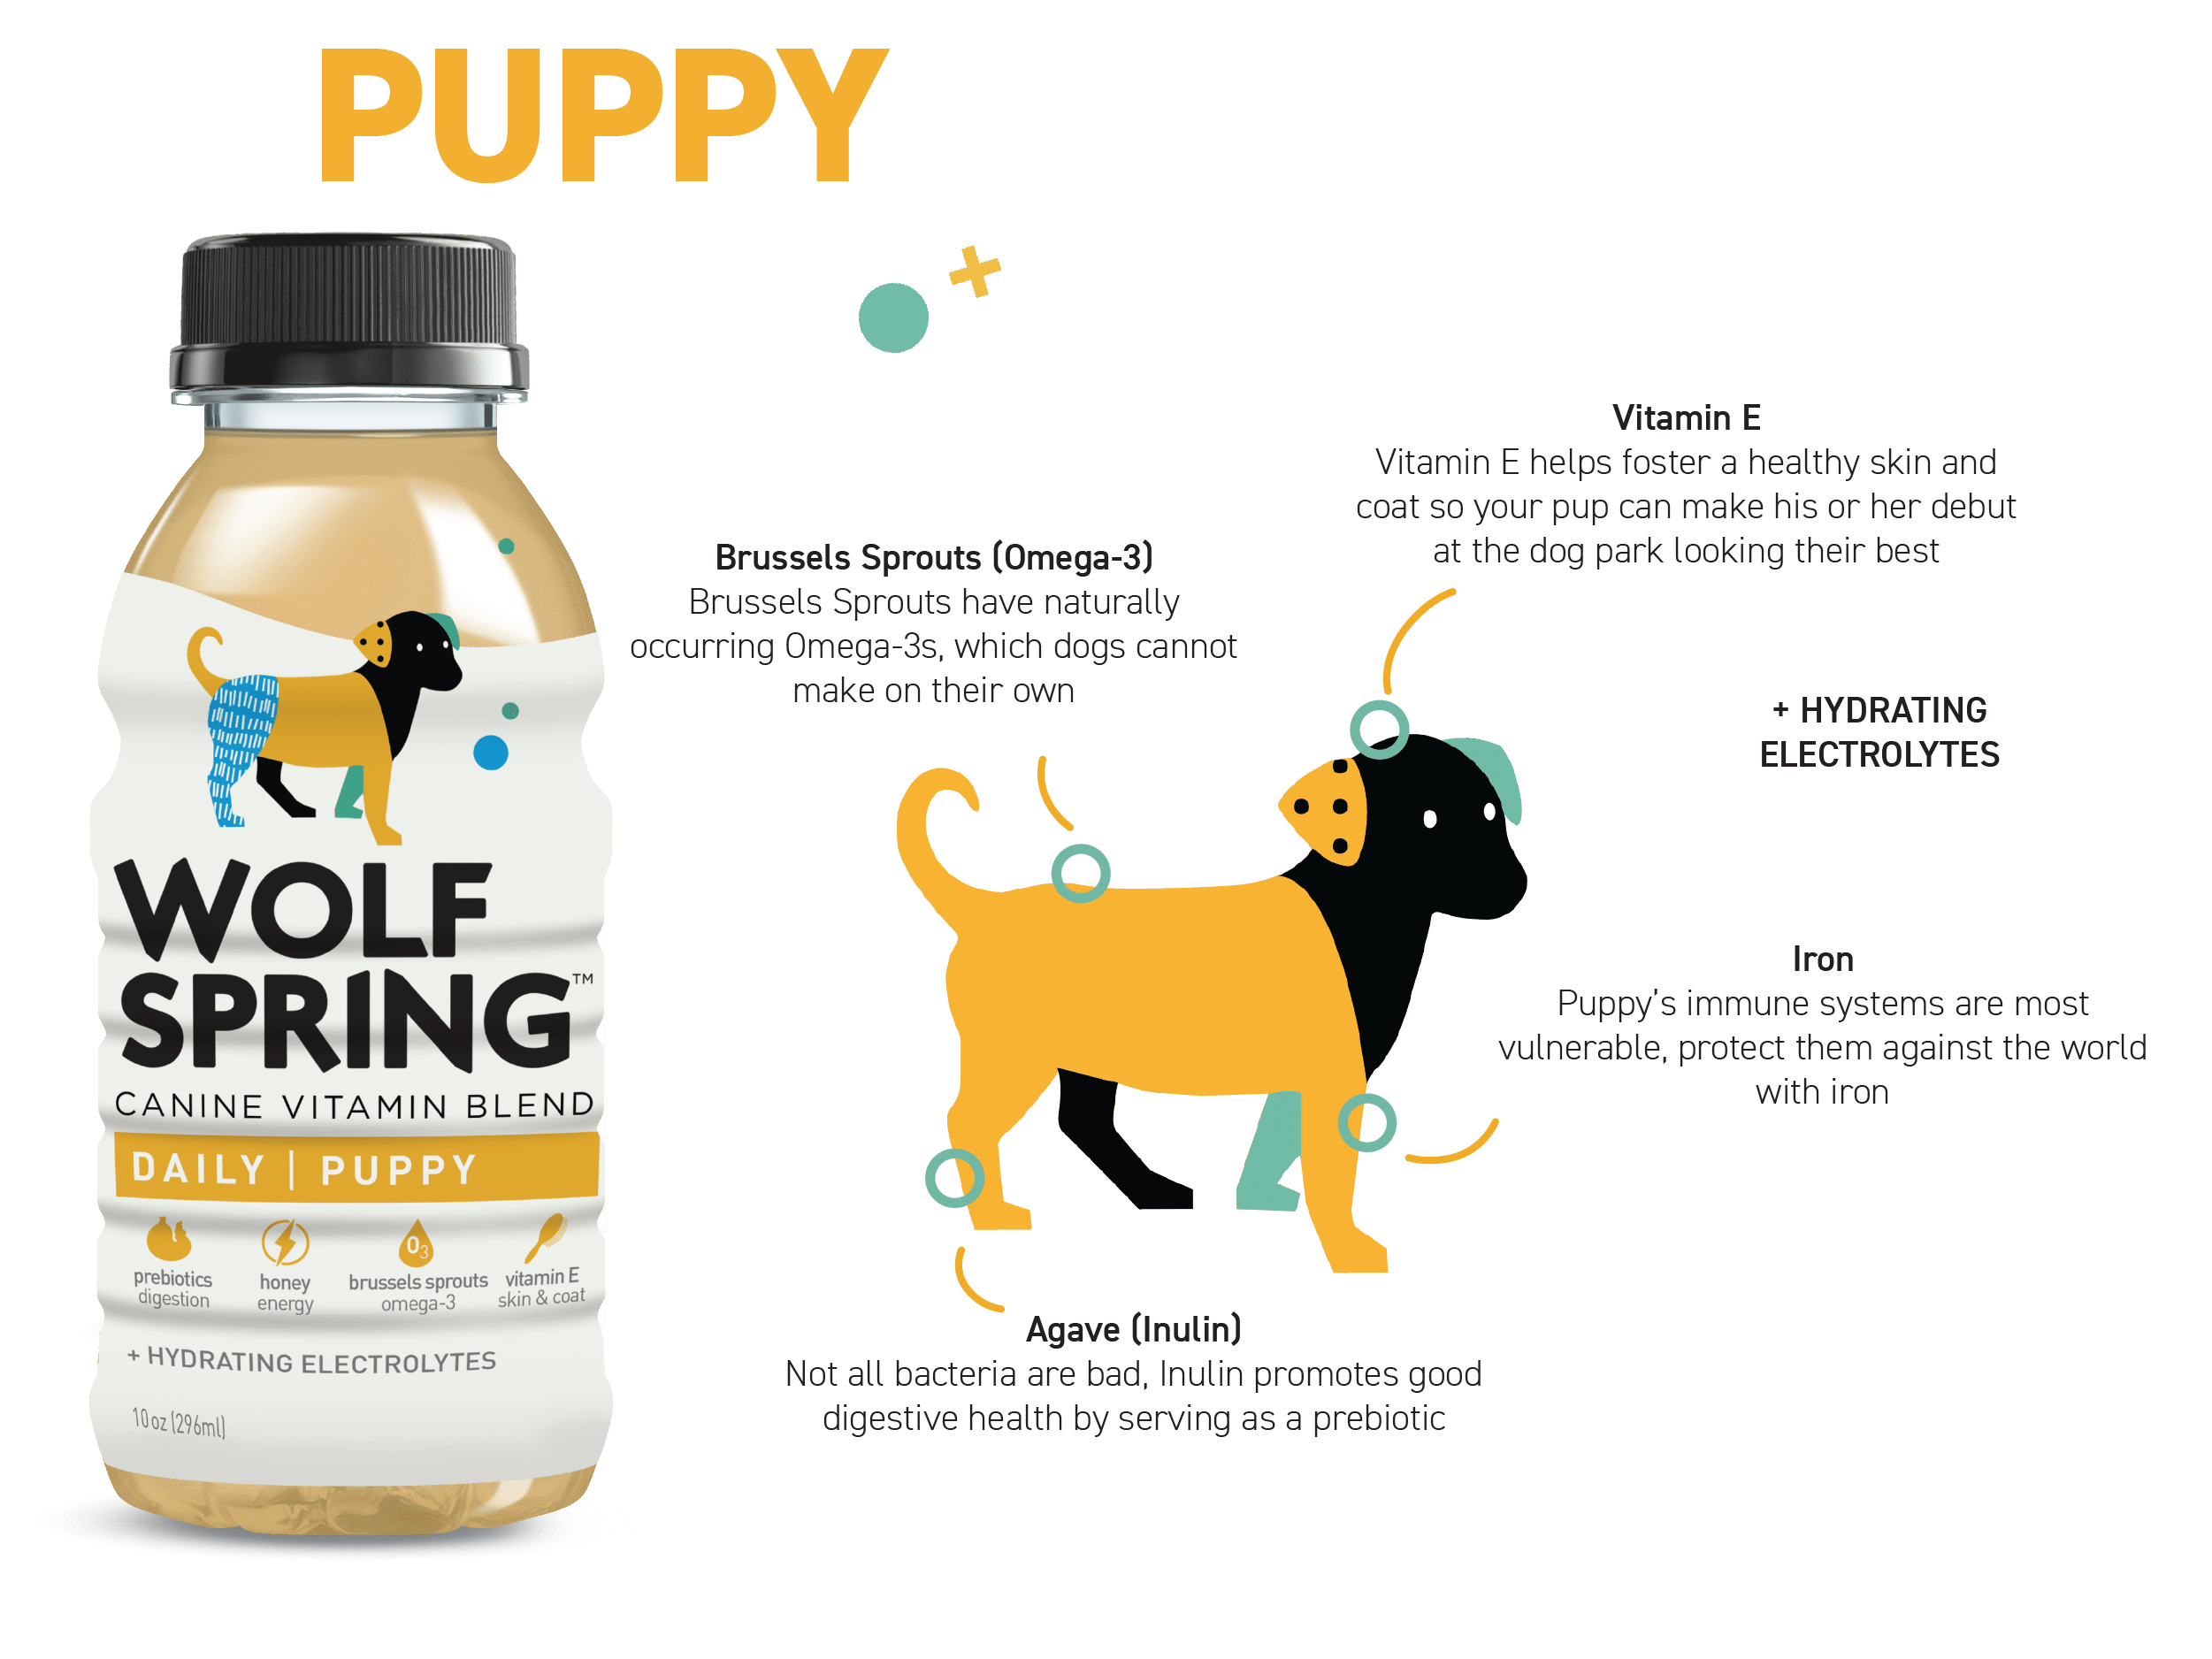 Canine vitamin blend - Wolf Spring - best dog vitamin